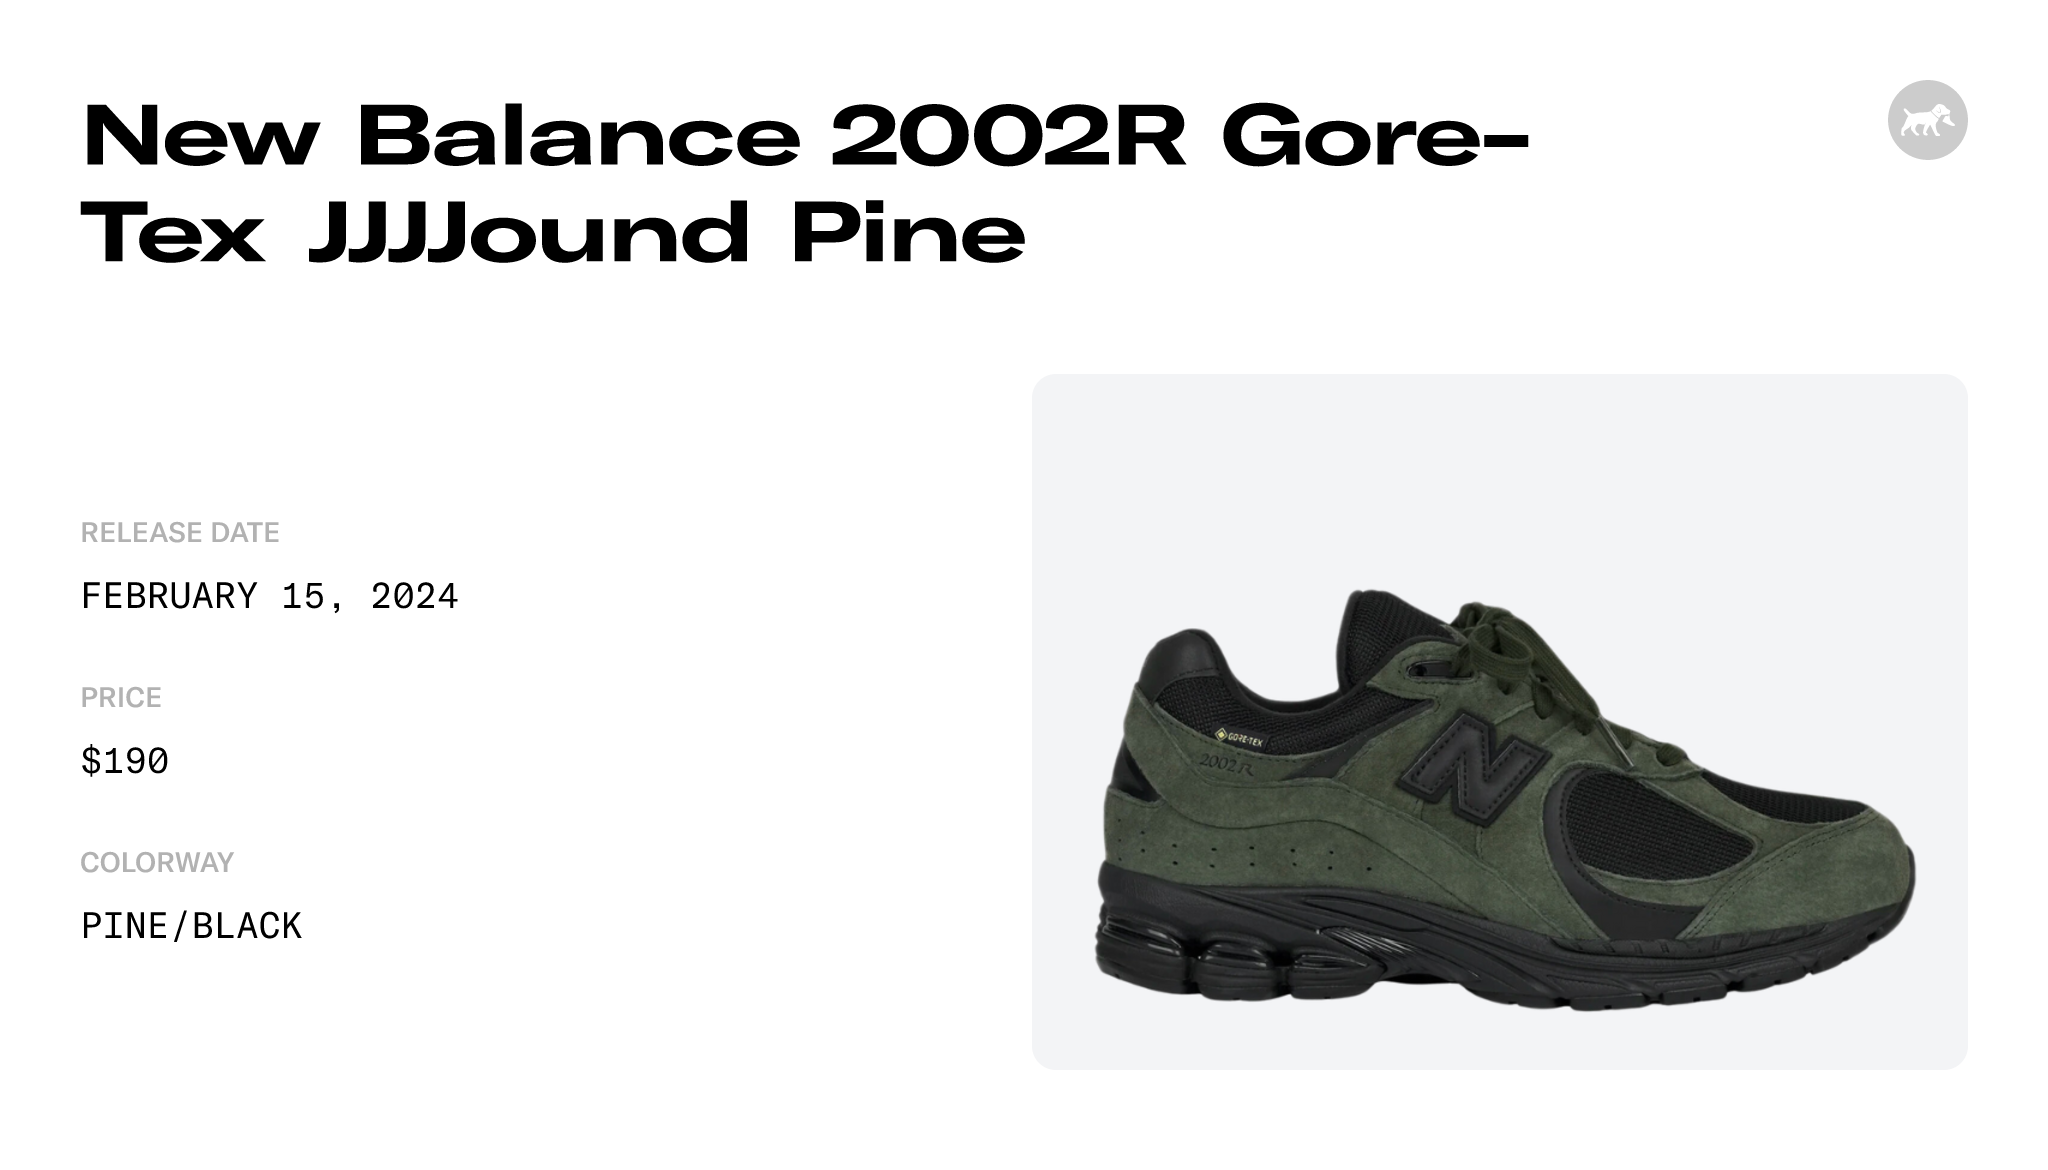 JJJJound New Balance 2002R GORE-TEX 